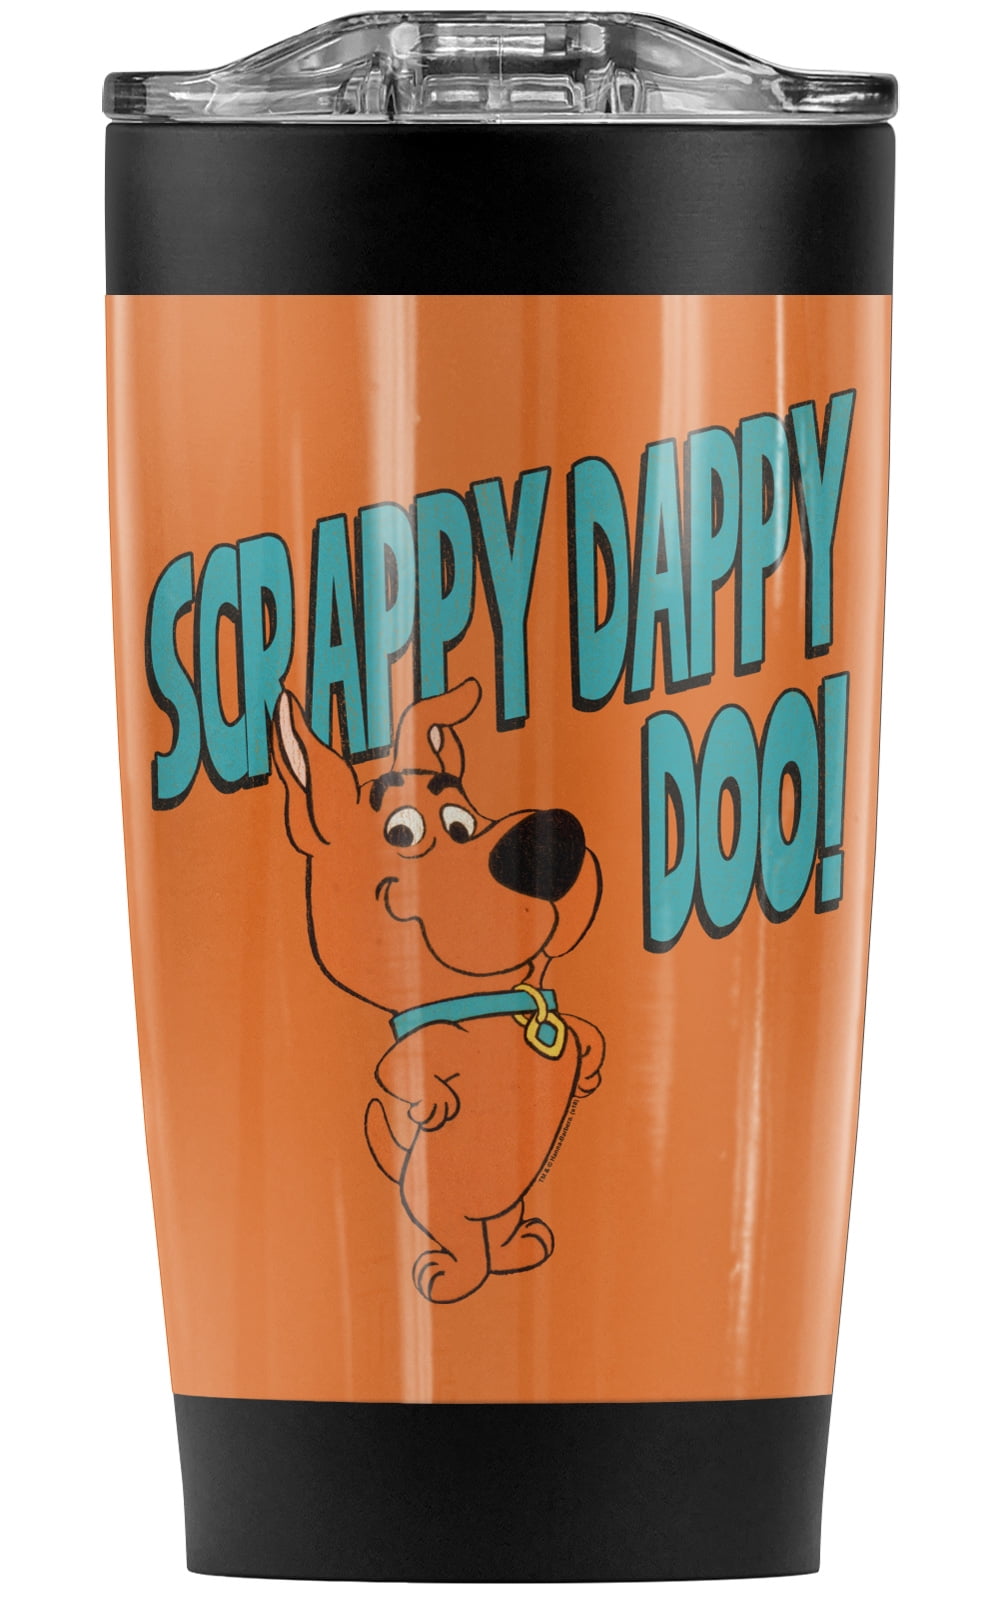 Scooby-Doo Scrappy-Doo Coaster Retro TV Drinks Mat Home Office Kitchen Gift 